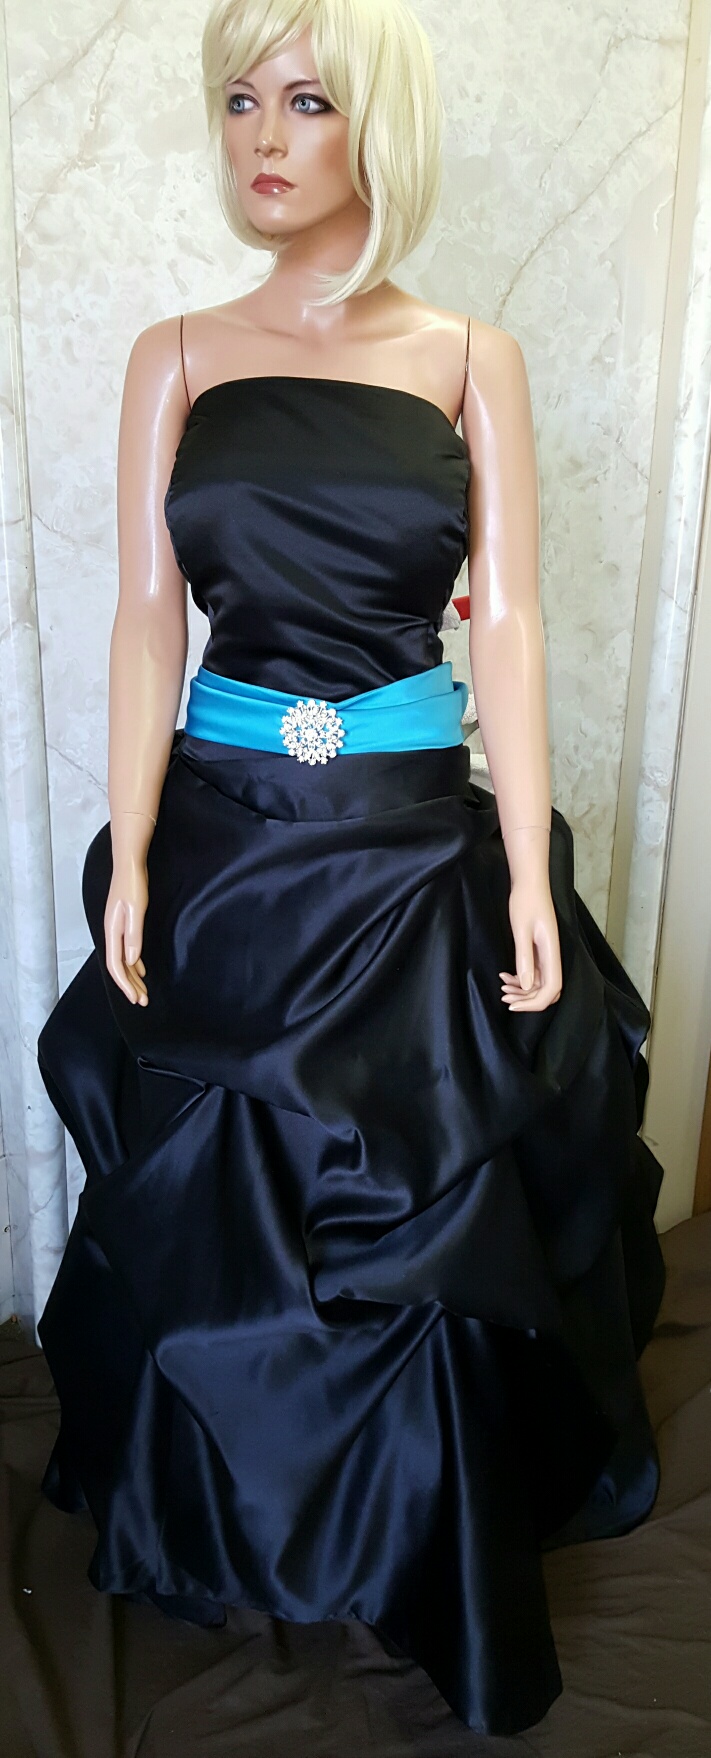 Black dress with turquoise sash